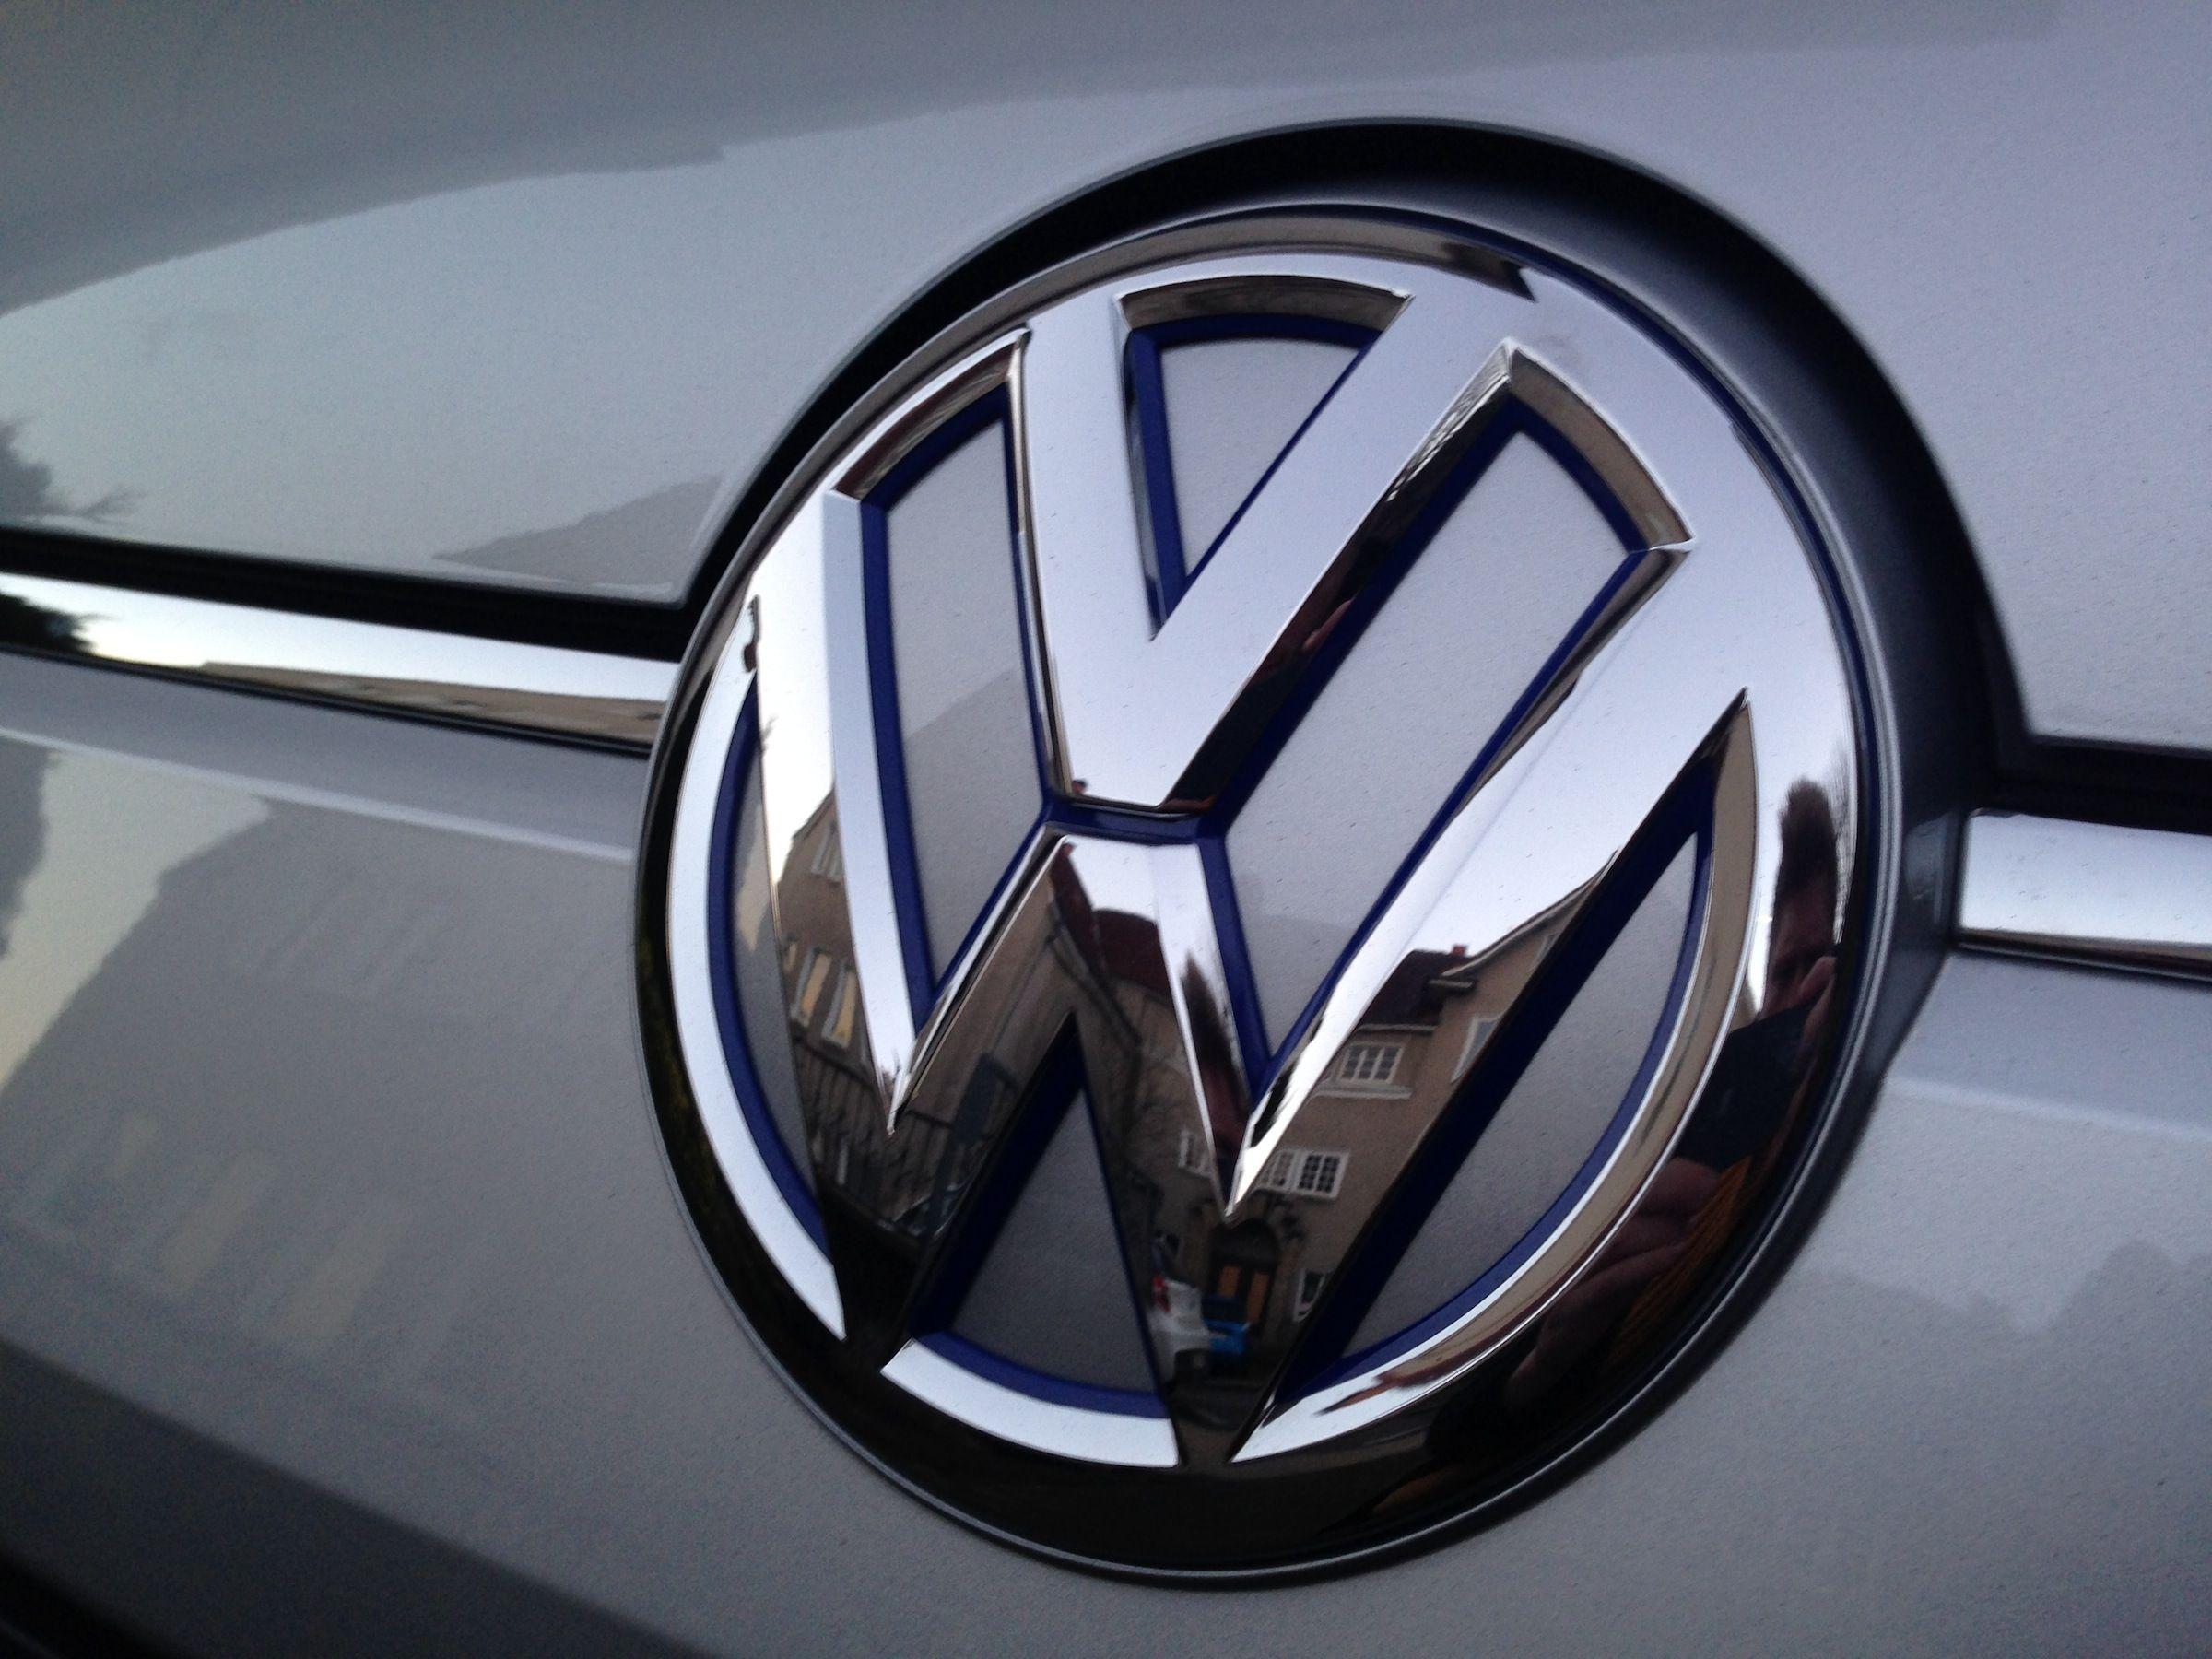 Cool VW Logo - Volkswagen Logo, Volkswagen Car Symbol Meaning and History | Car ...